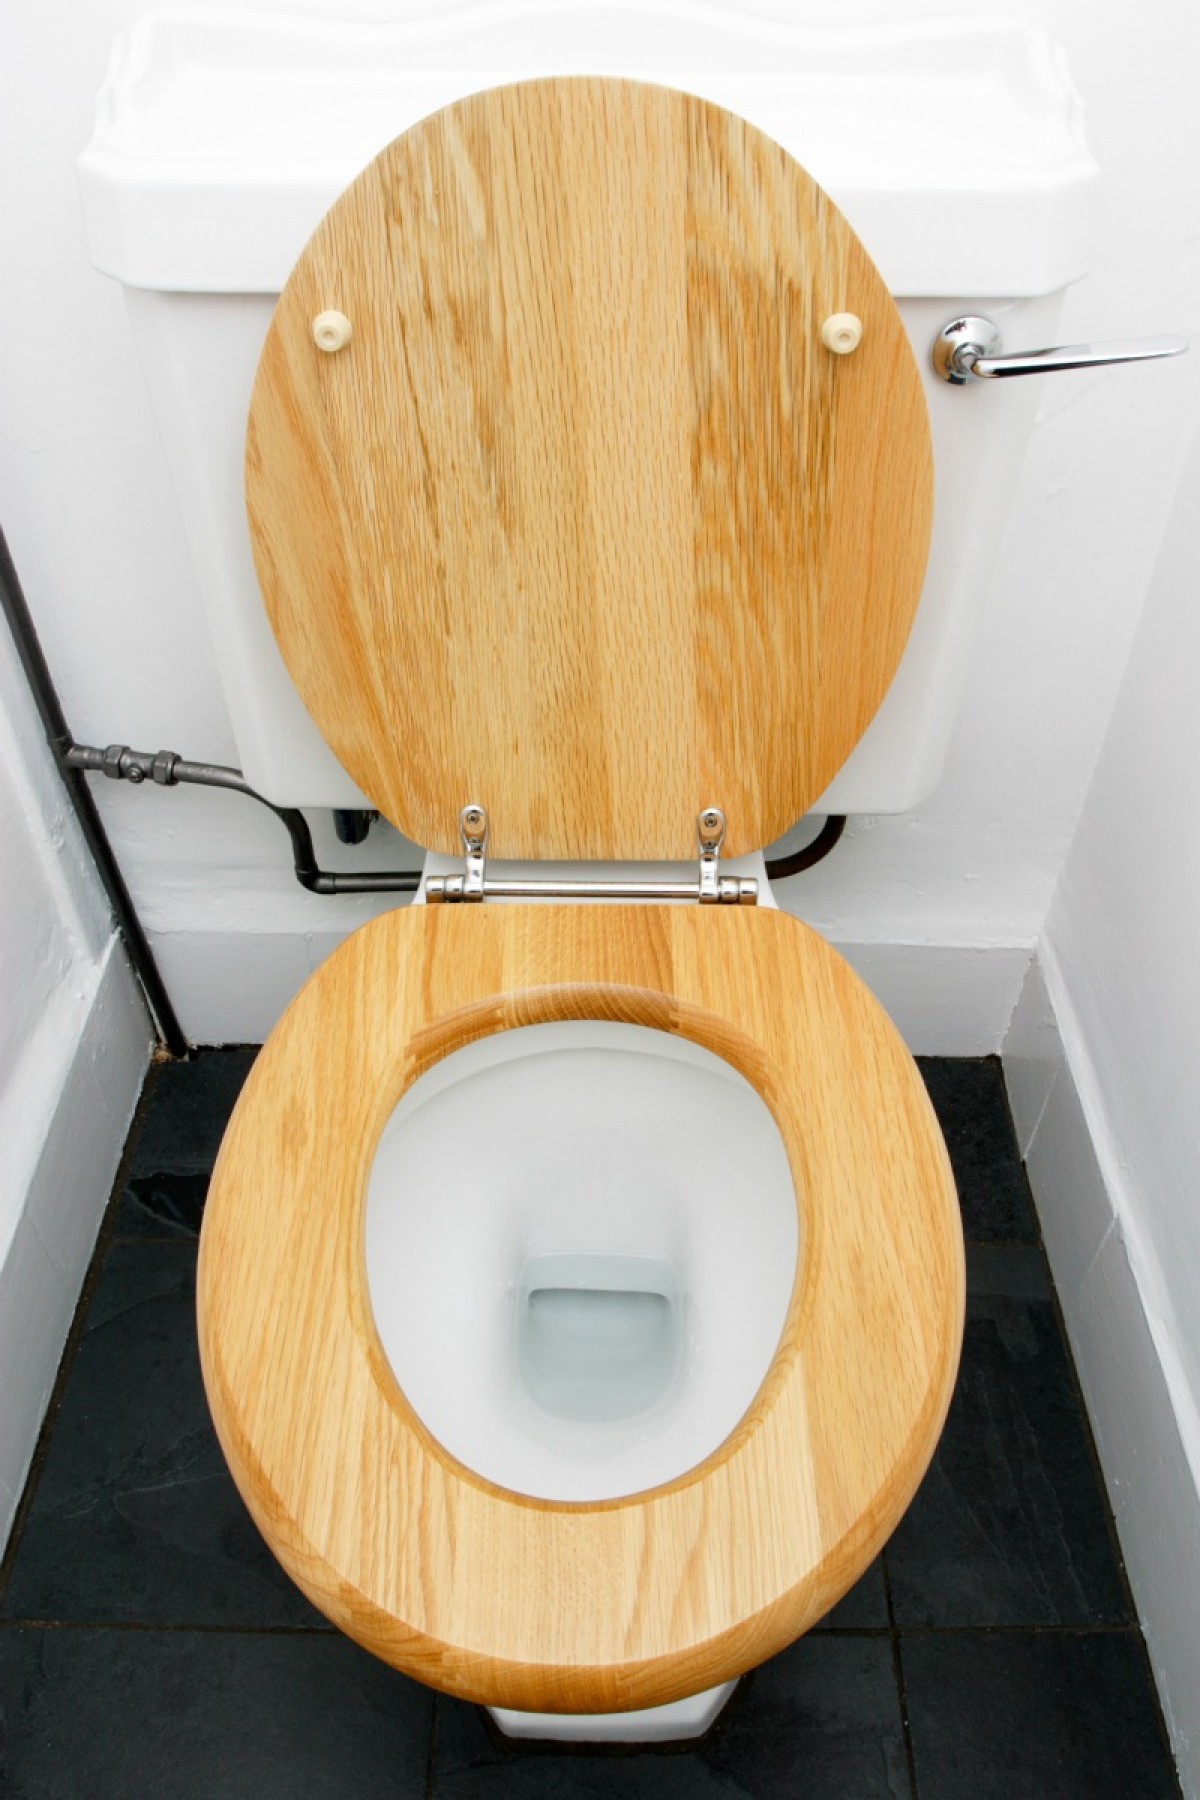 Repairing a Peeling Wood Toilet Seat? ThriftyFun